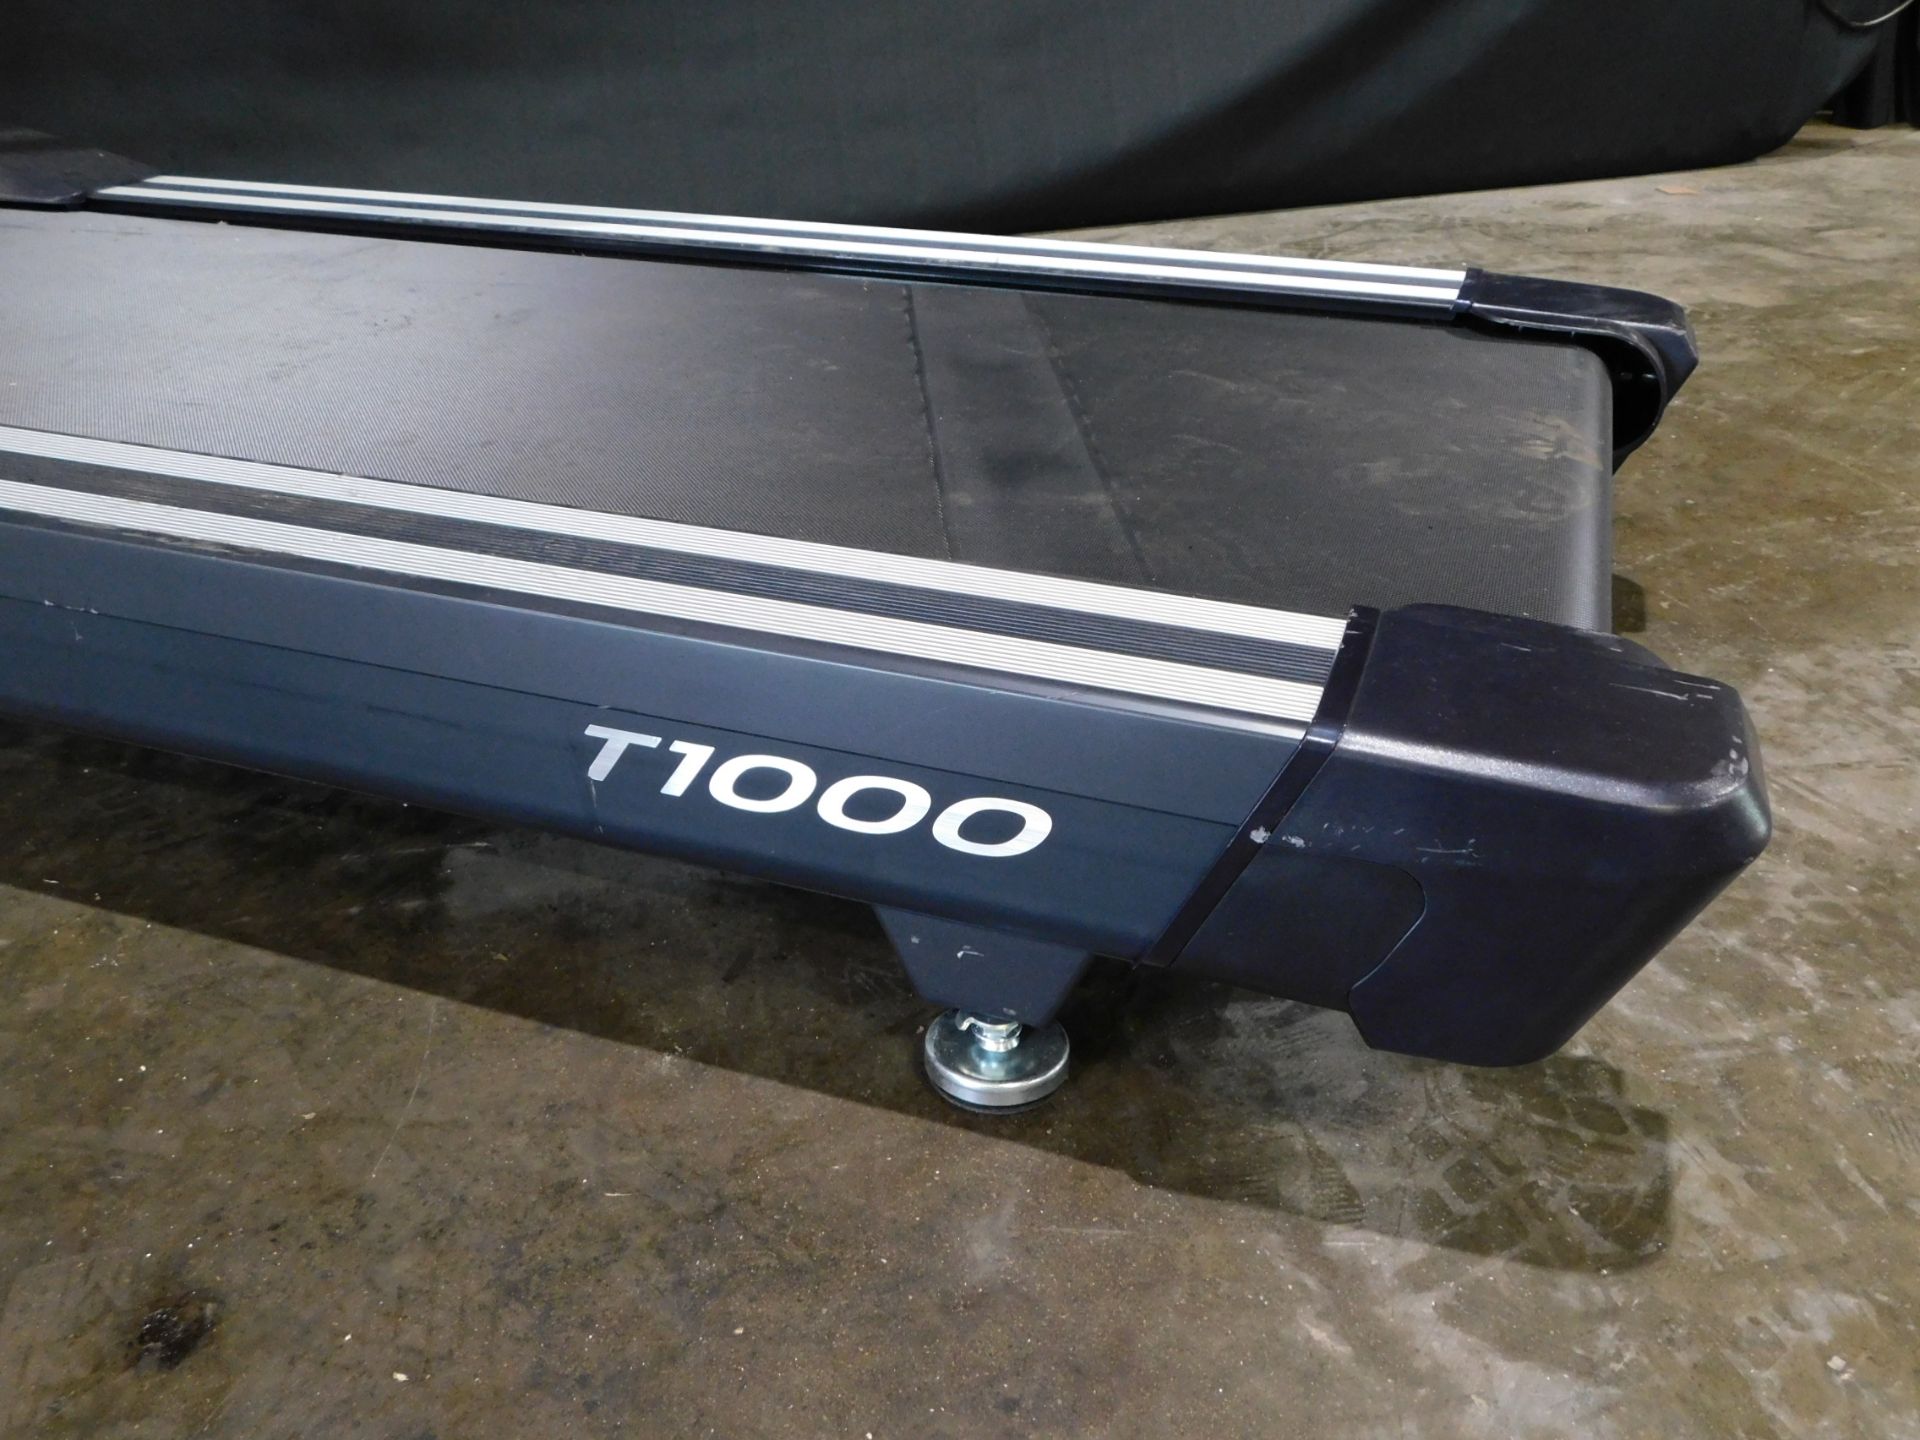 Bodycraft T1000 Treadmill-Demonstrator Unit - Image 6 of 17